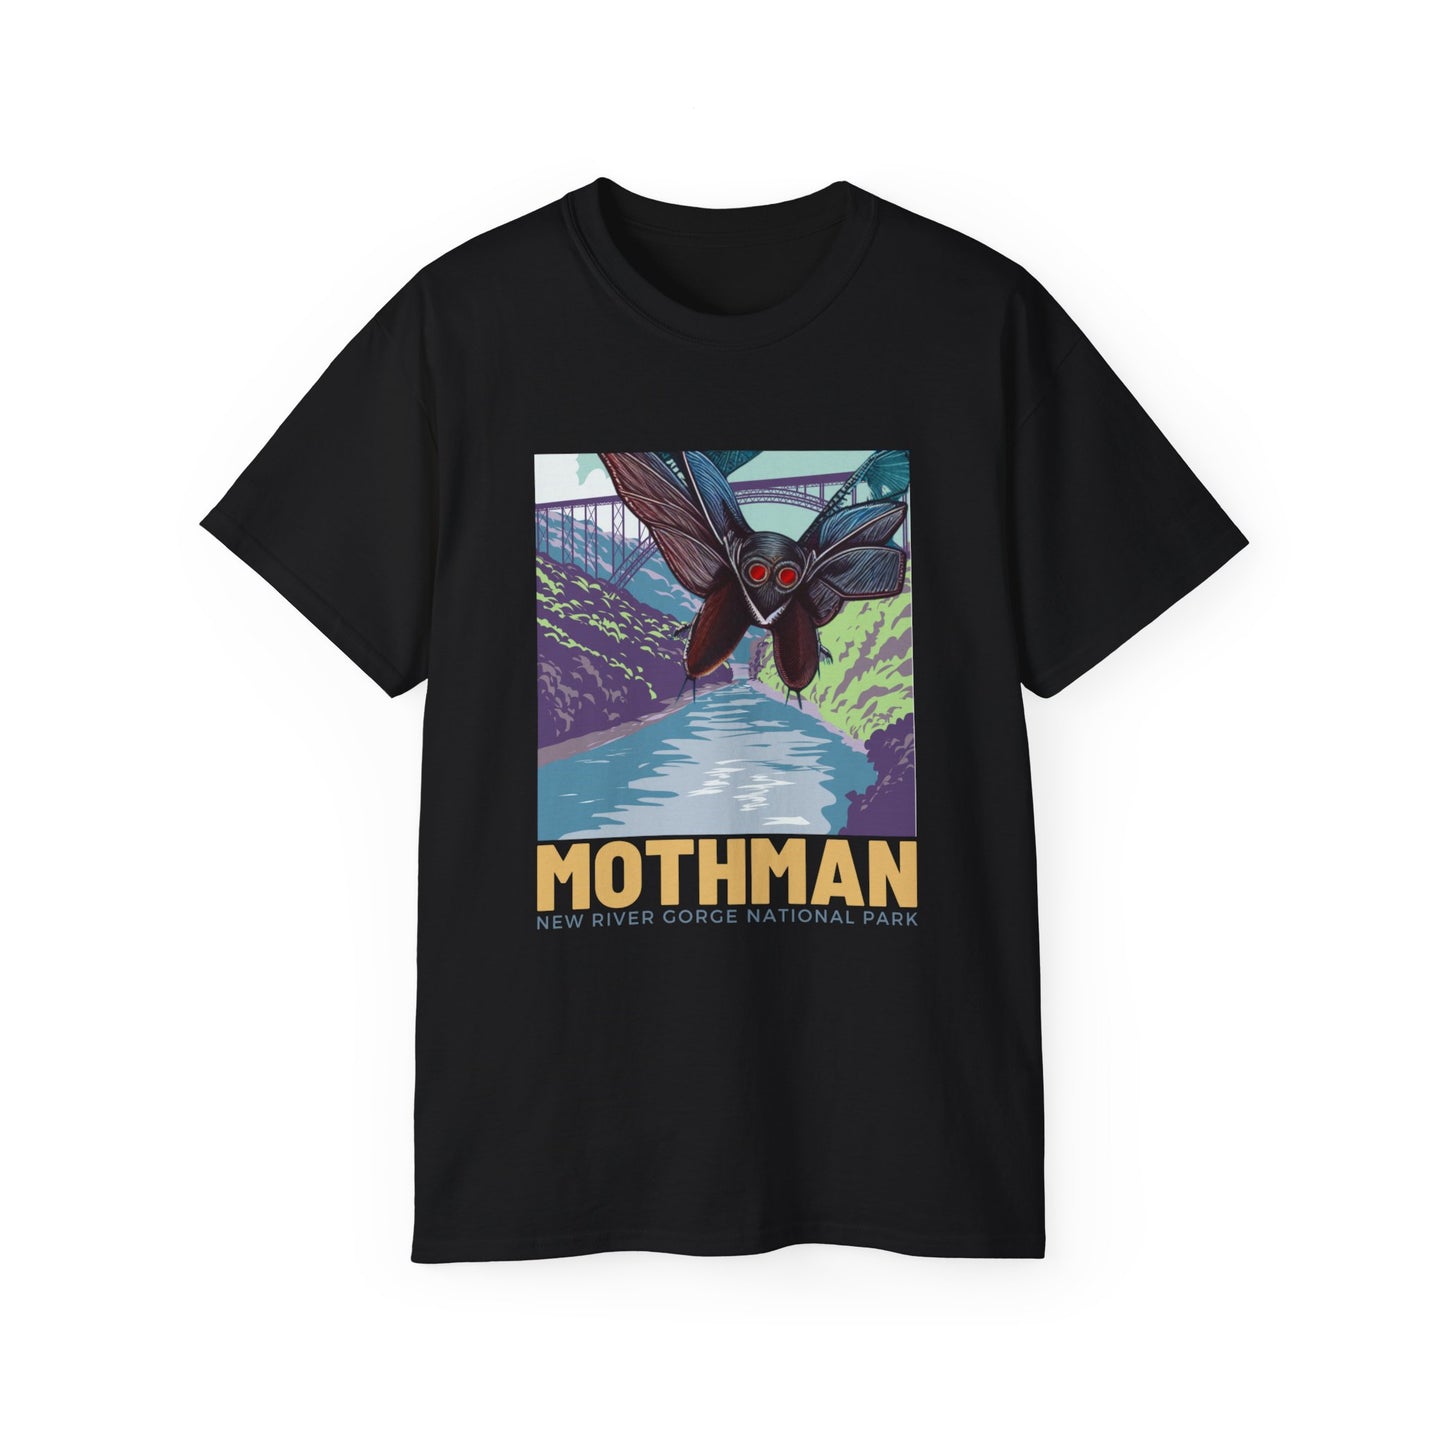 Mothman National Park Shirt